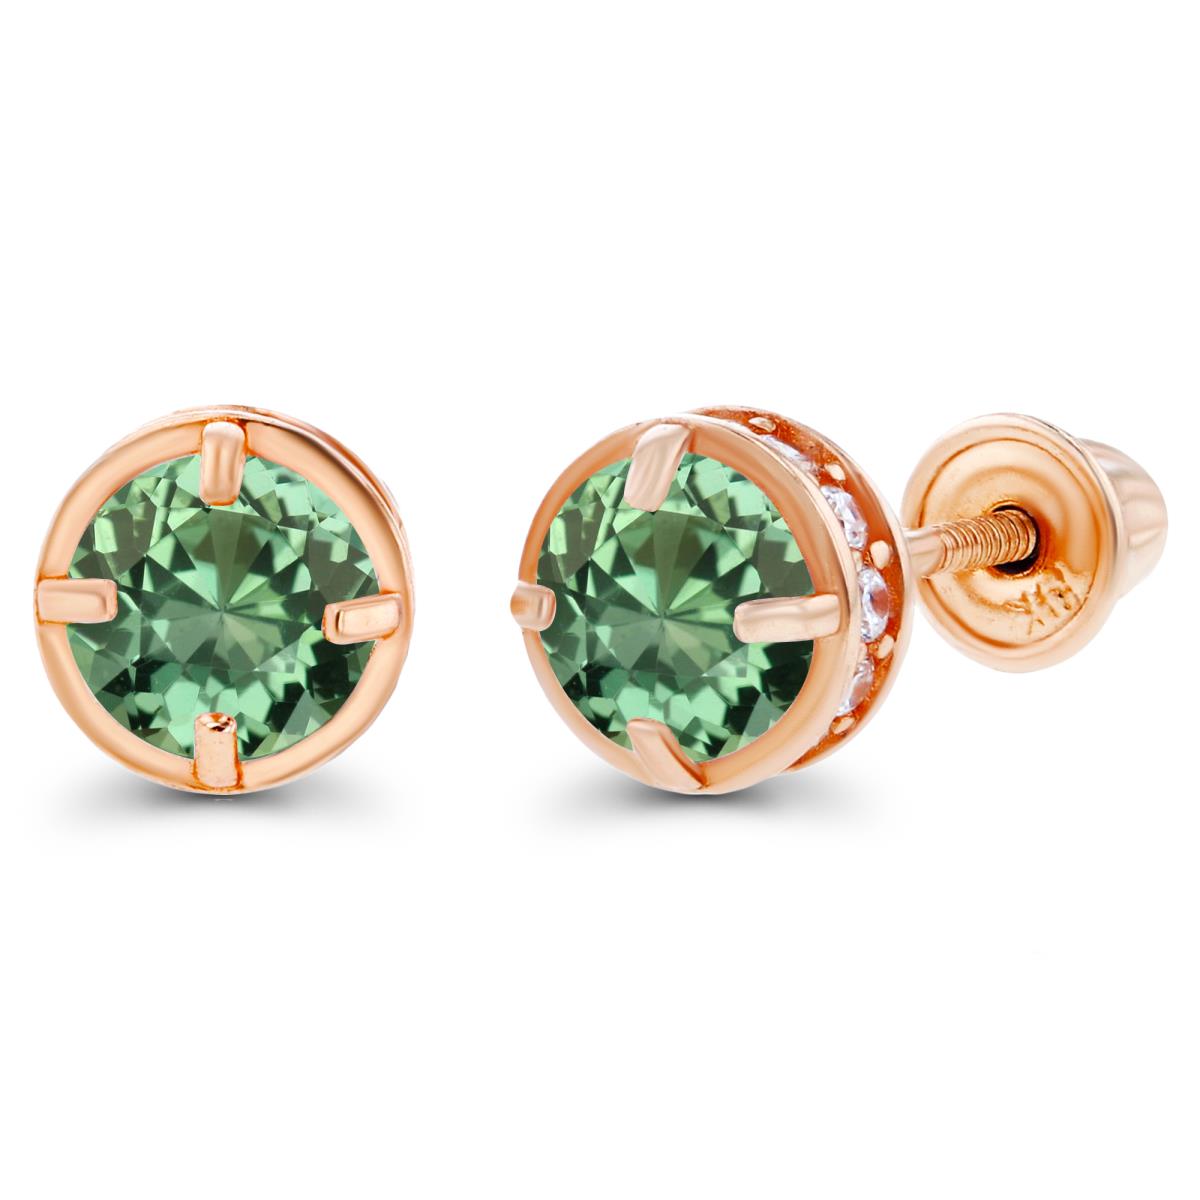 14K Rose Gold 4mm Created Green Sapphire & 1mm Created White Sapphire Basket Screwback Earrings